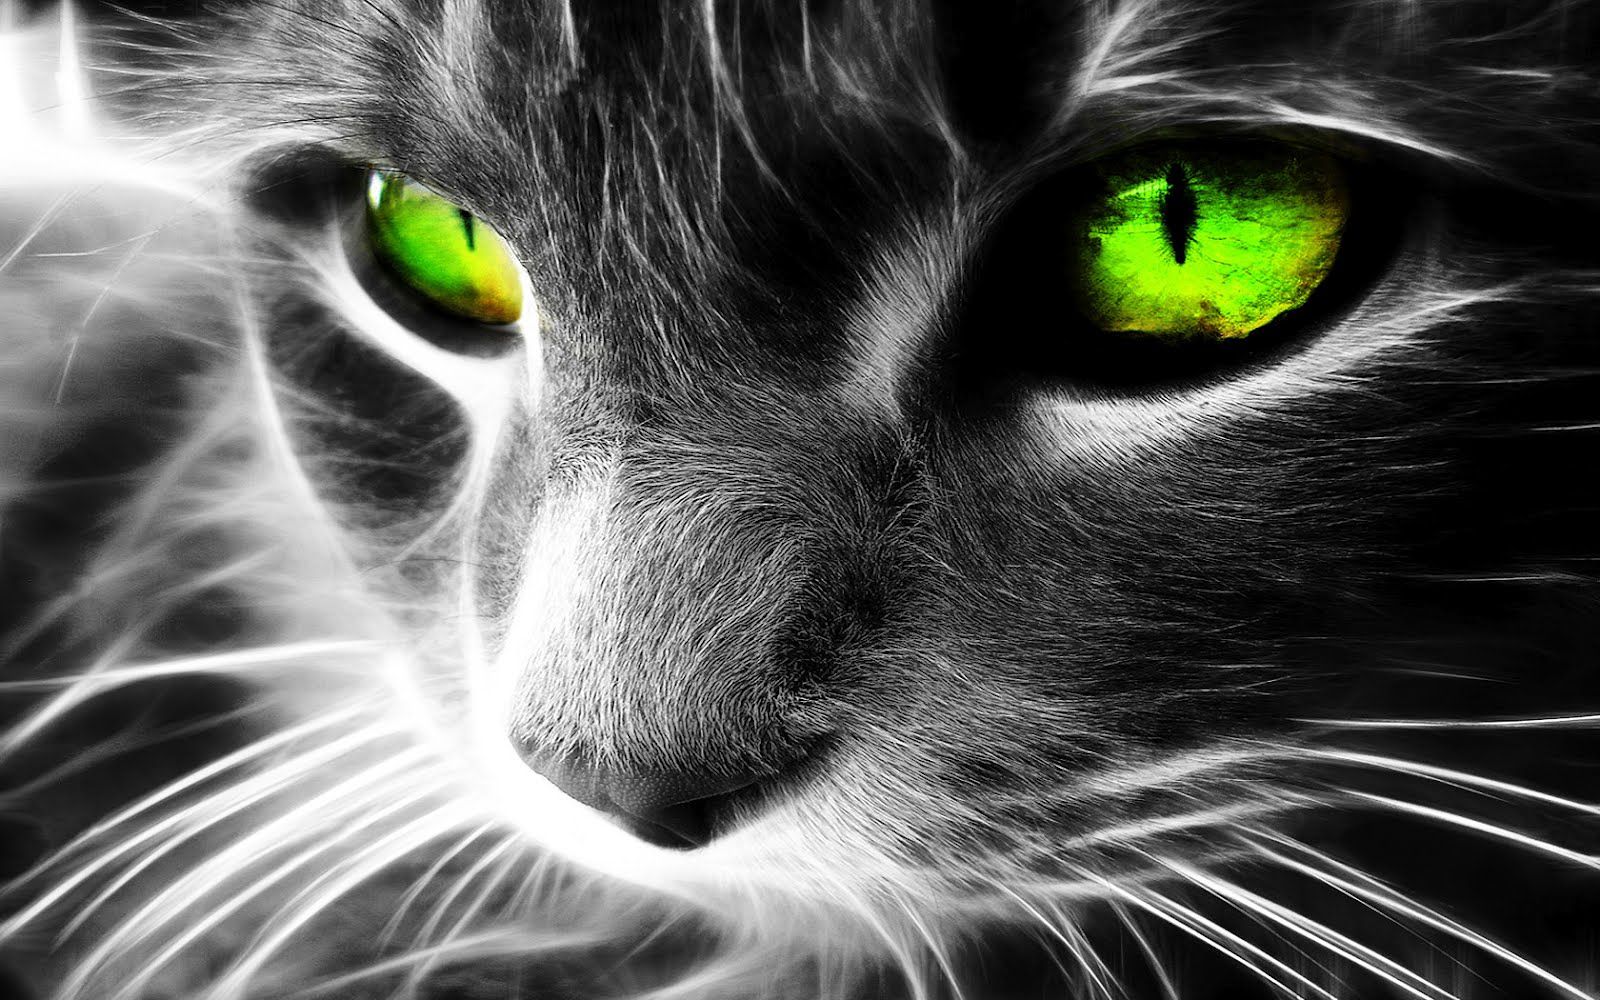 Black Cat Eyes Wallpaper, Blue Cat Eyes, Yellow Cat Eyes, Green & Red Cats Eyes Wallpaper for Desktop. Cat wallpaper, Animal wallpaper, Cross paintings